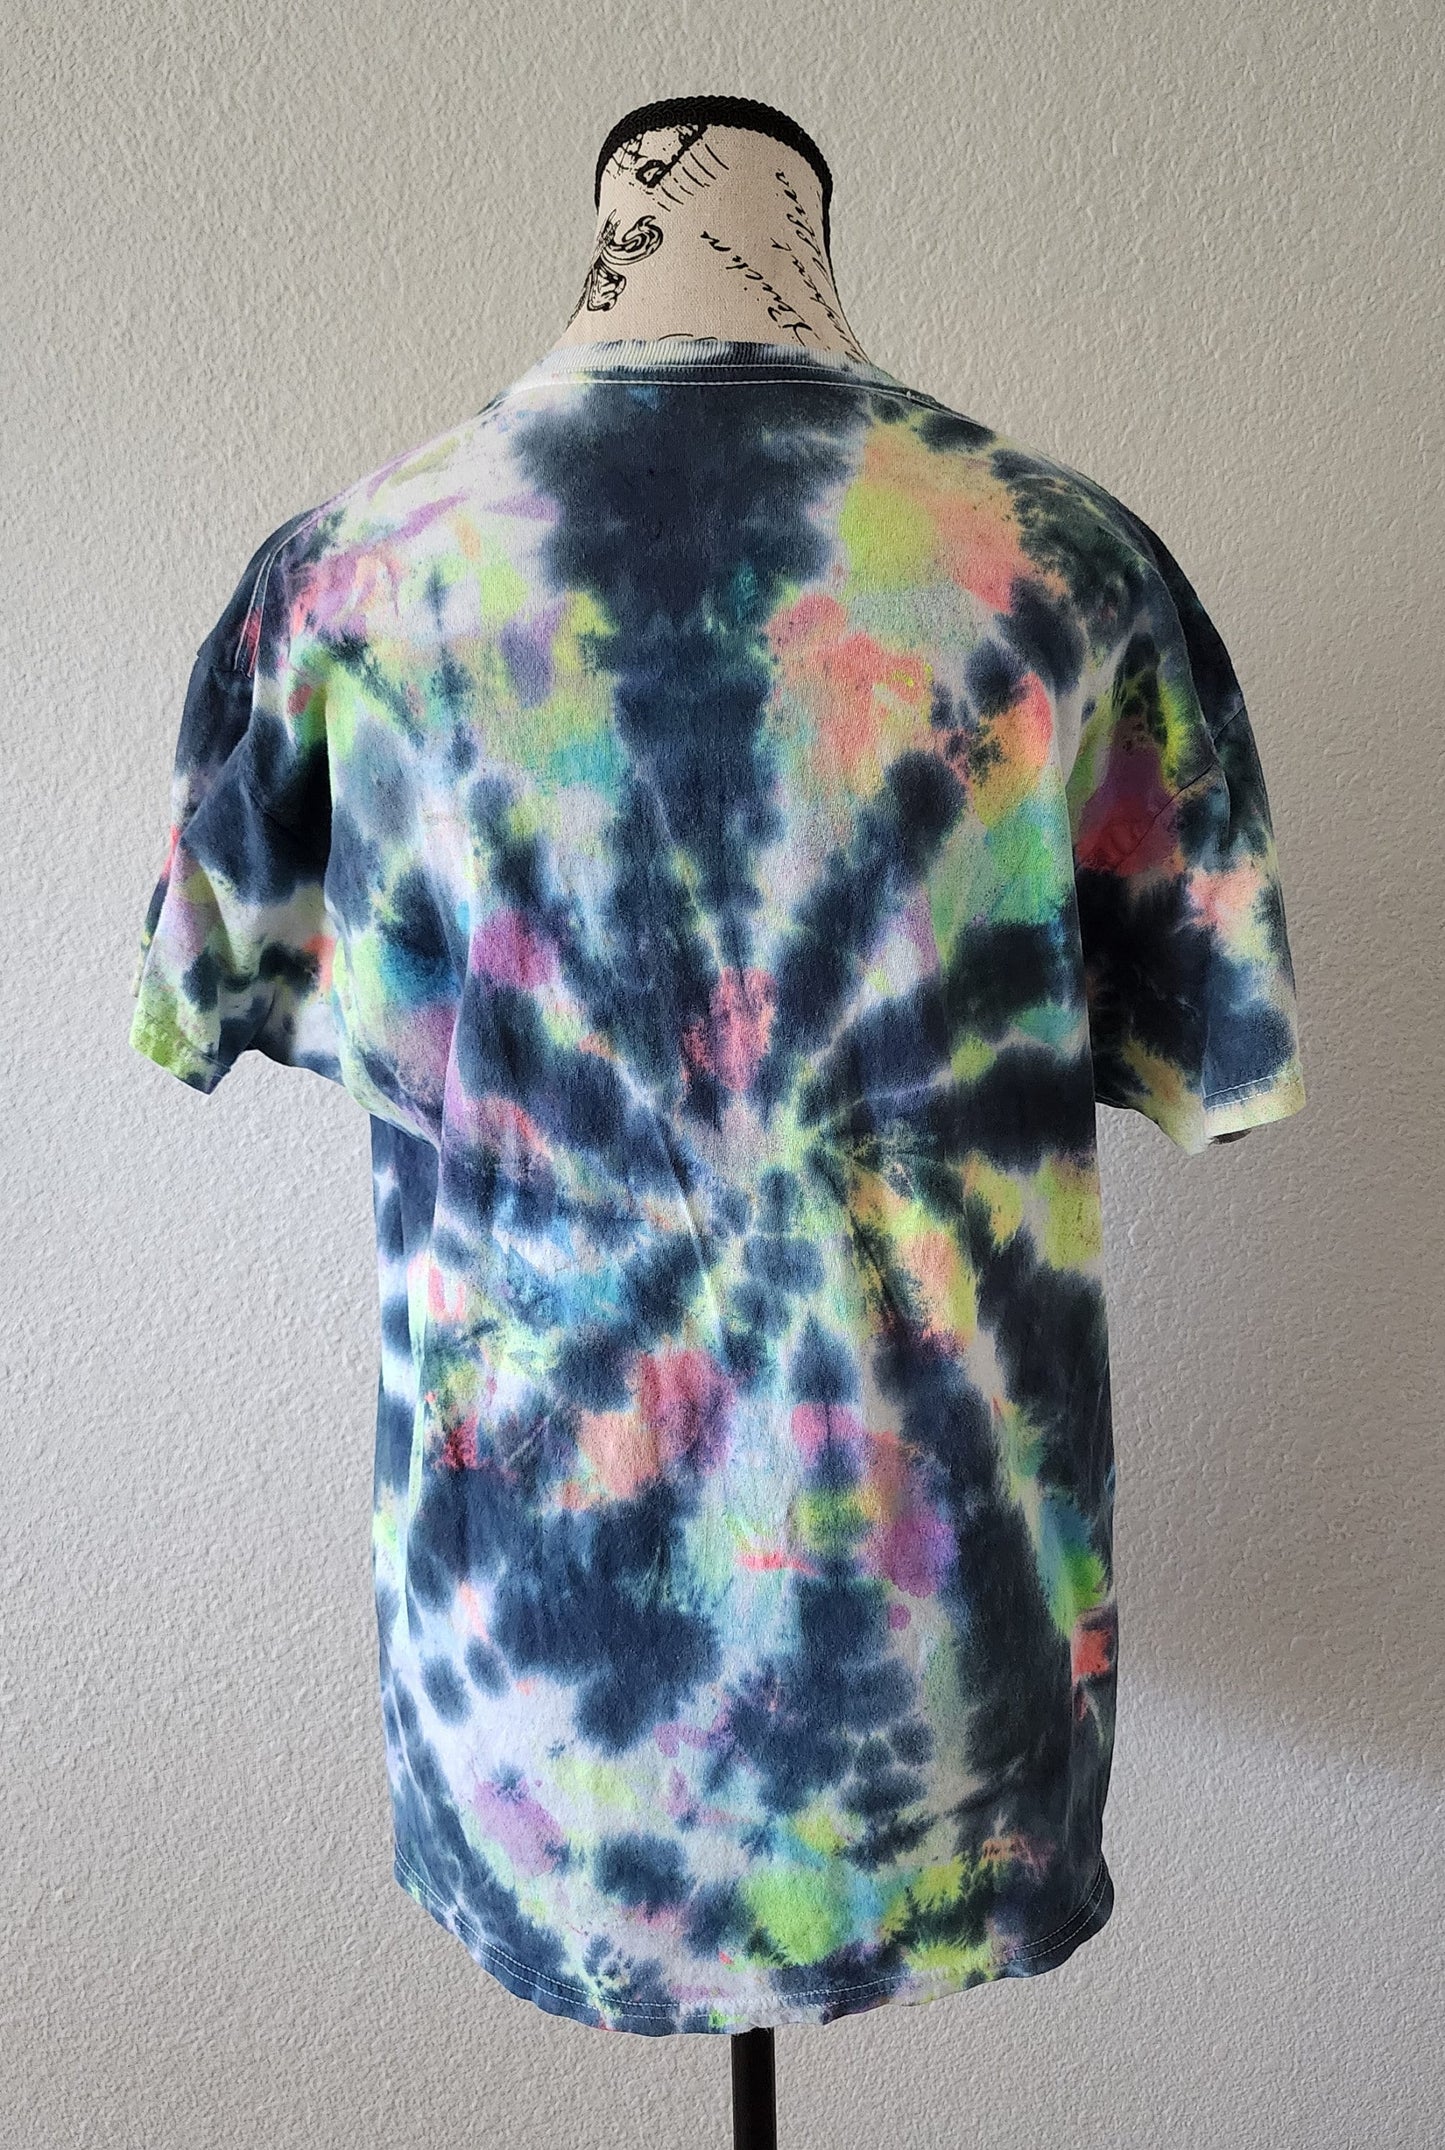 Black Spiral Neon Tie Dye T Shirt Customizable Unisex Size L